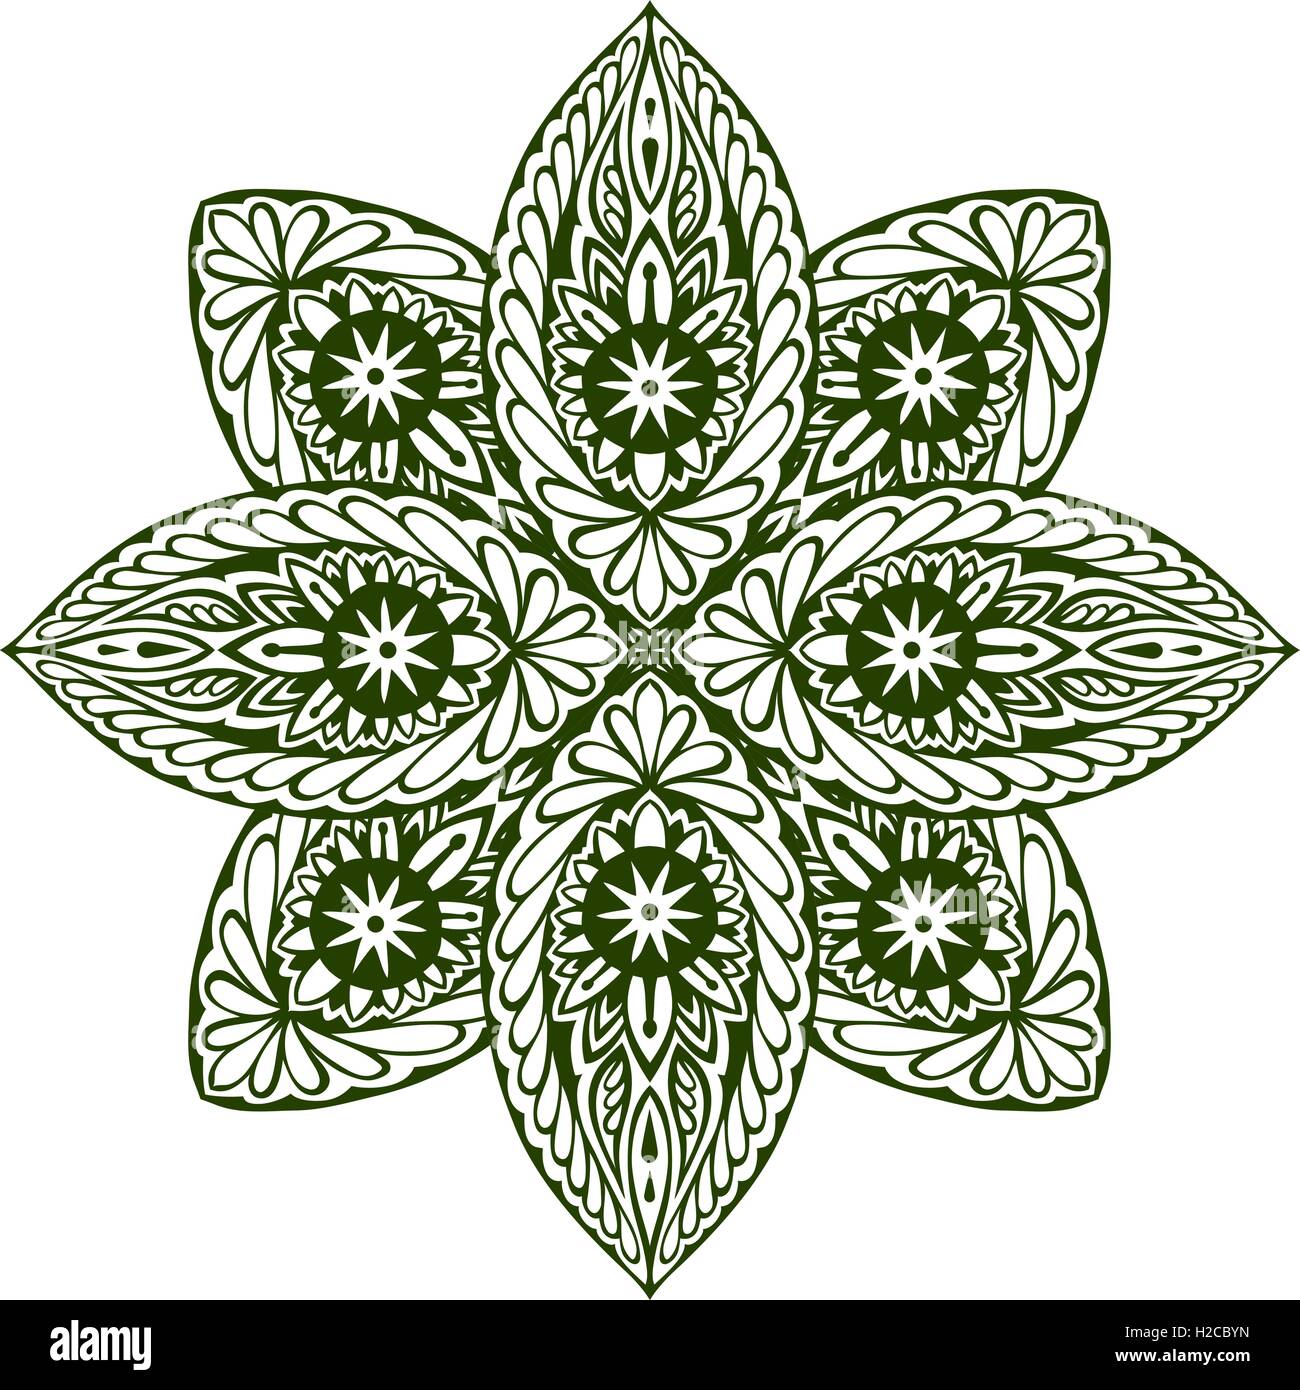 Mandala zu skizzieren. Dekorative Runde Ornament. Vektor-illustration Stock Vektor